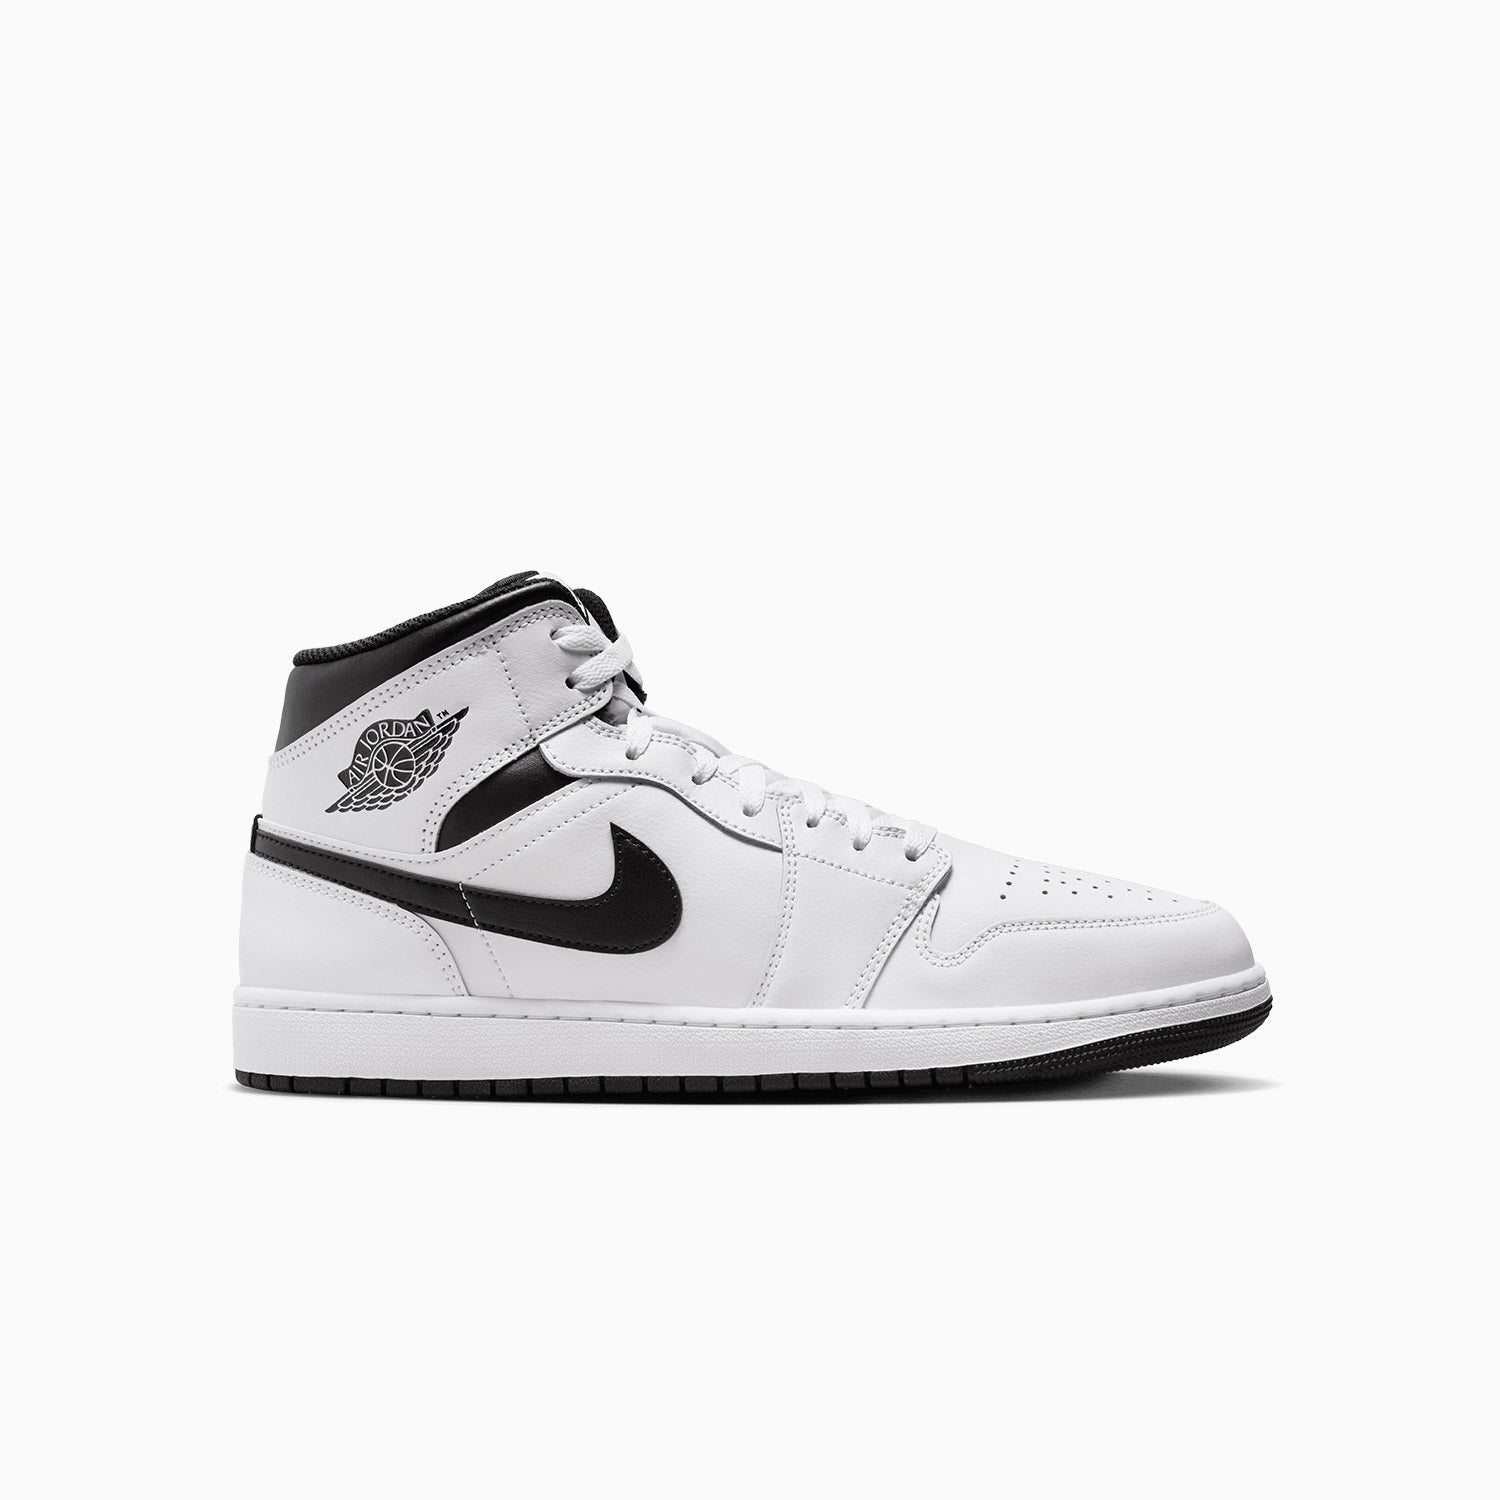 mens-air-jordan-1-mid-white-black-shoes-dq8426-132